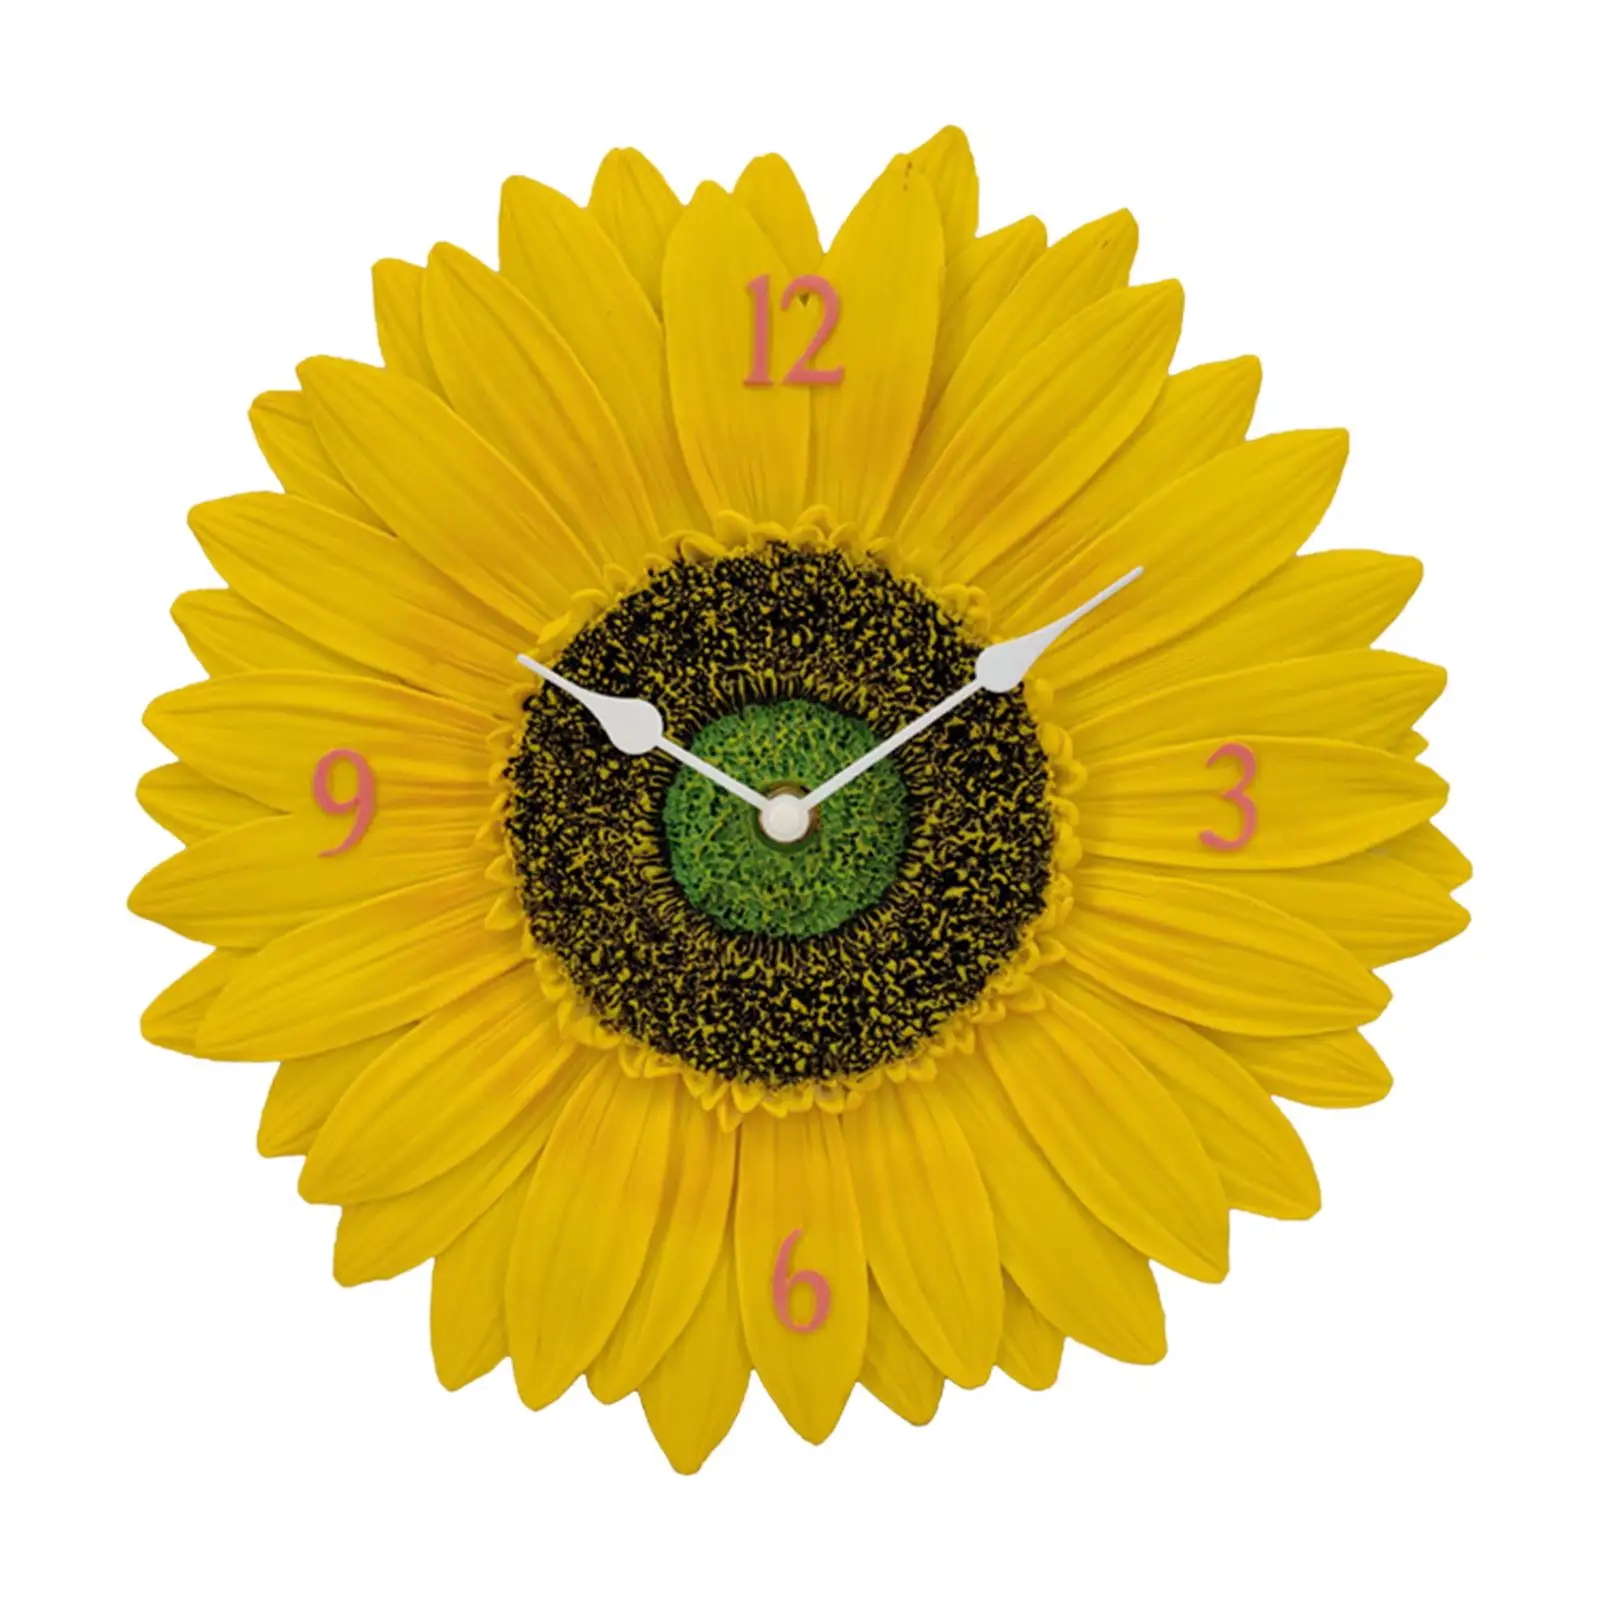 Sunflower outdoor wall clock decorative 